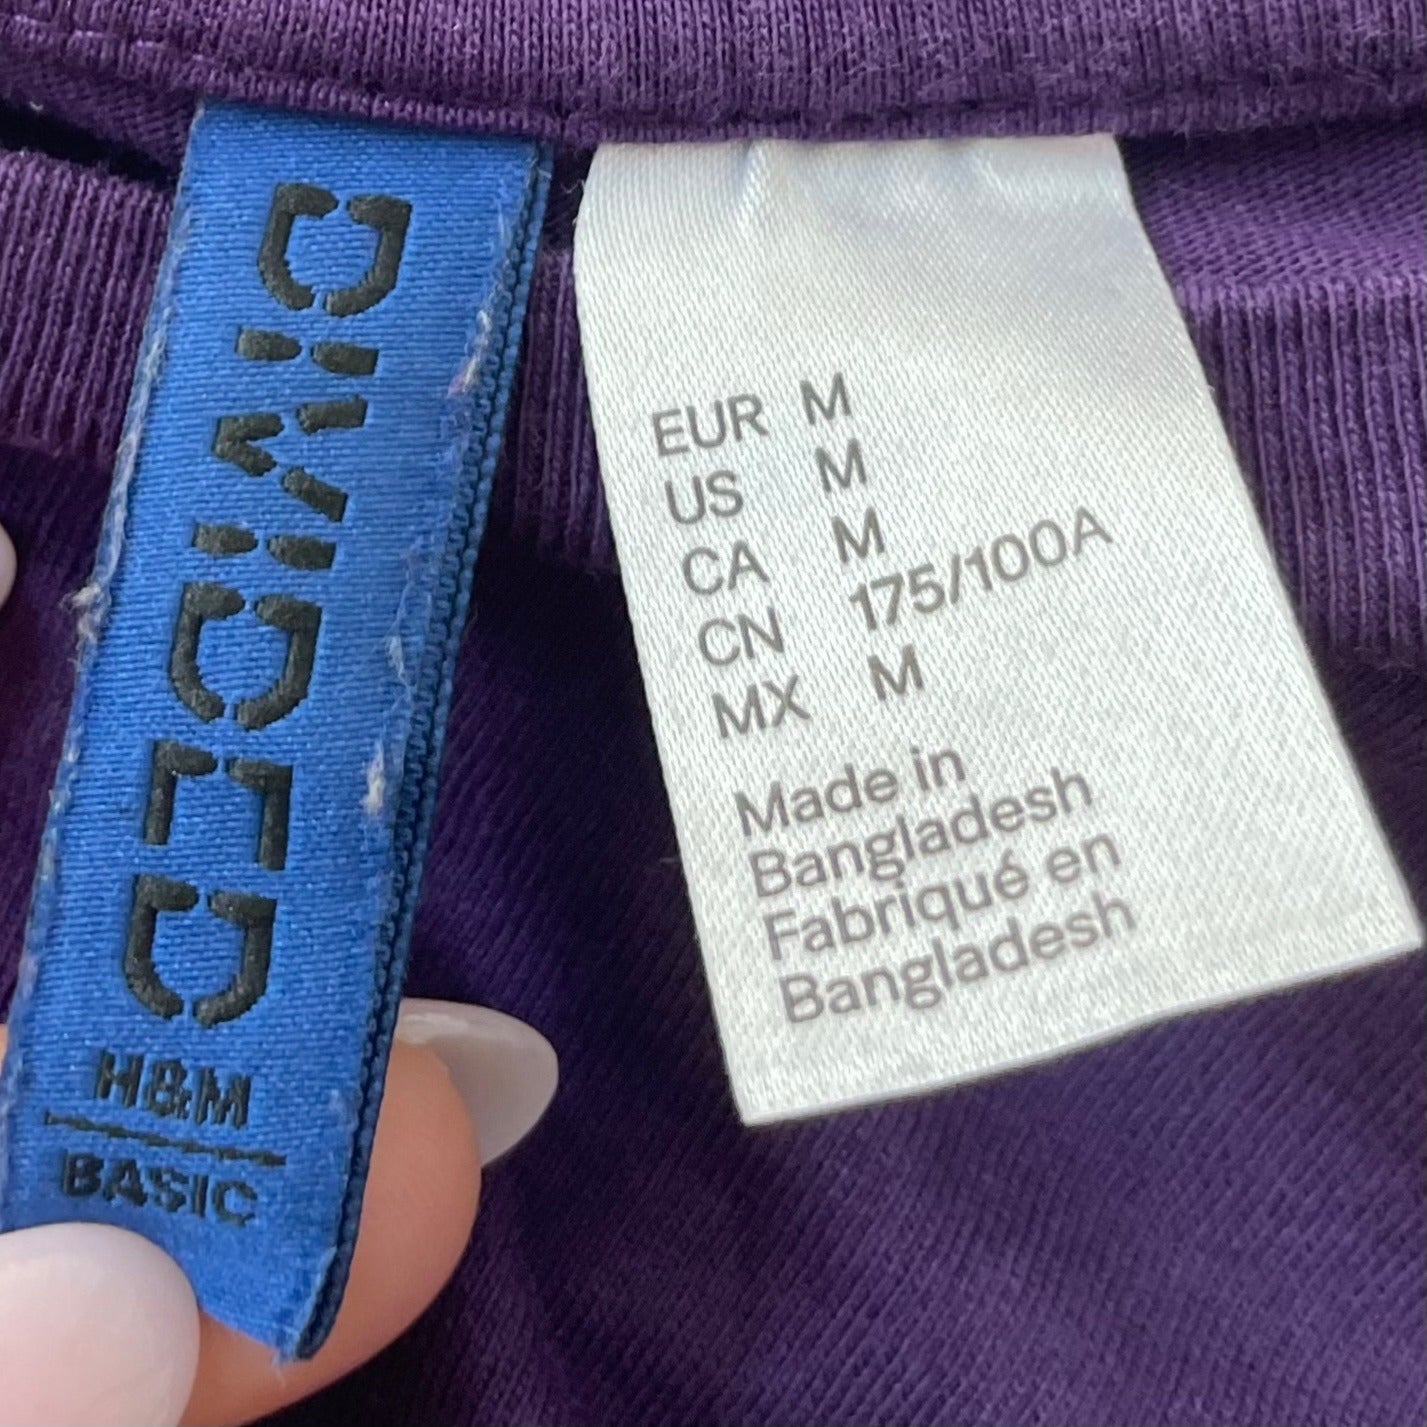 H&M Women's Size Medium Dark Purple Crew Neck T-Shirt